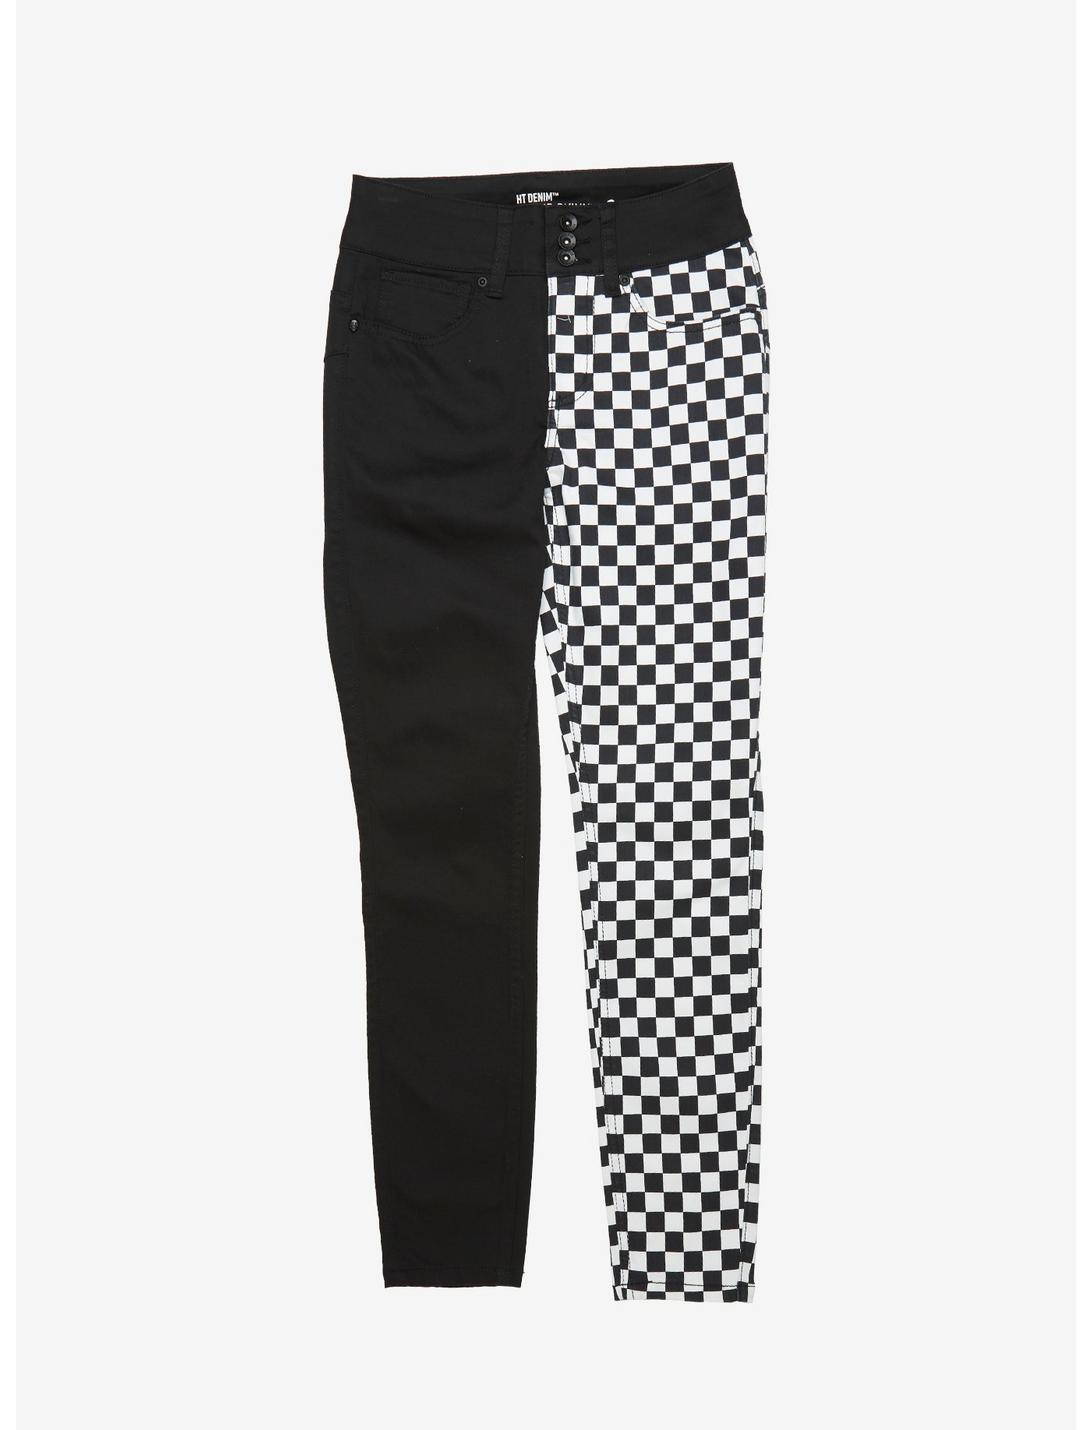 HT Denim Black & White Checkered Split Leg Hi-Rise Super Skinny Jeans, MULTI, hi-res